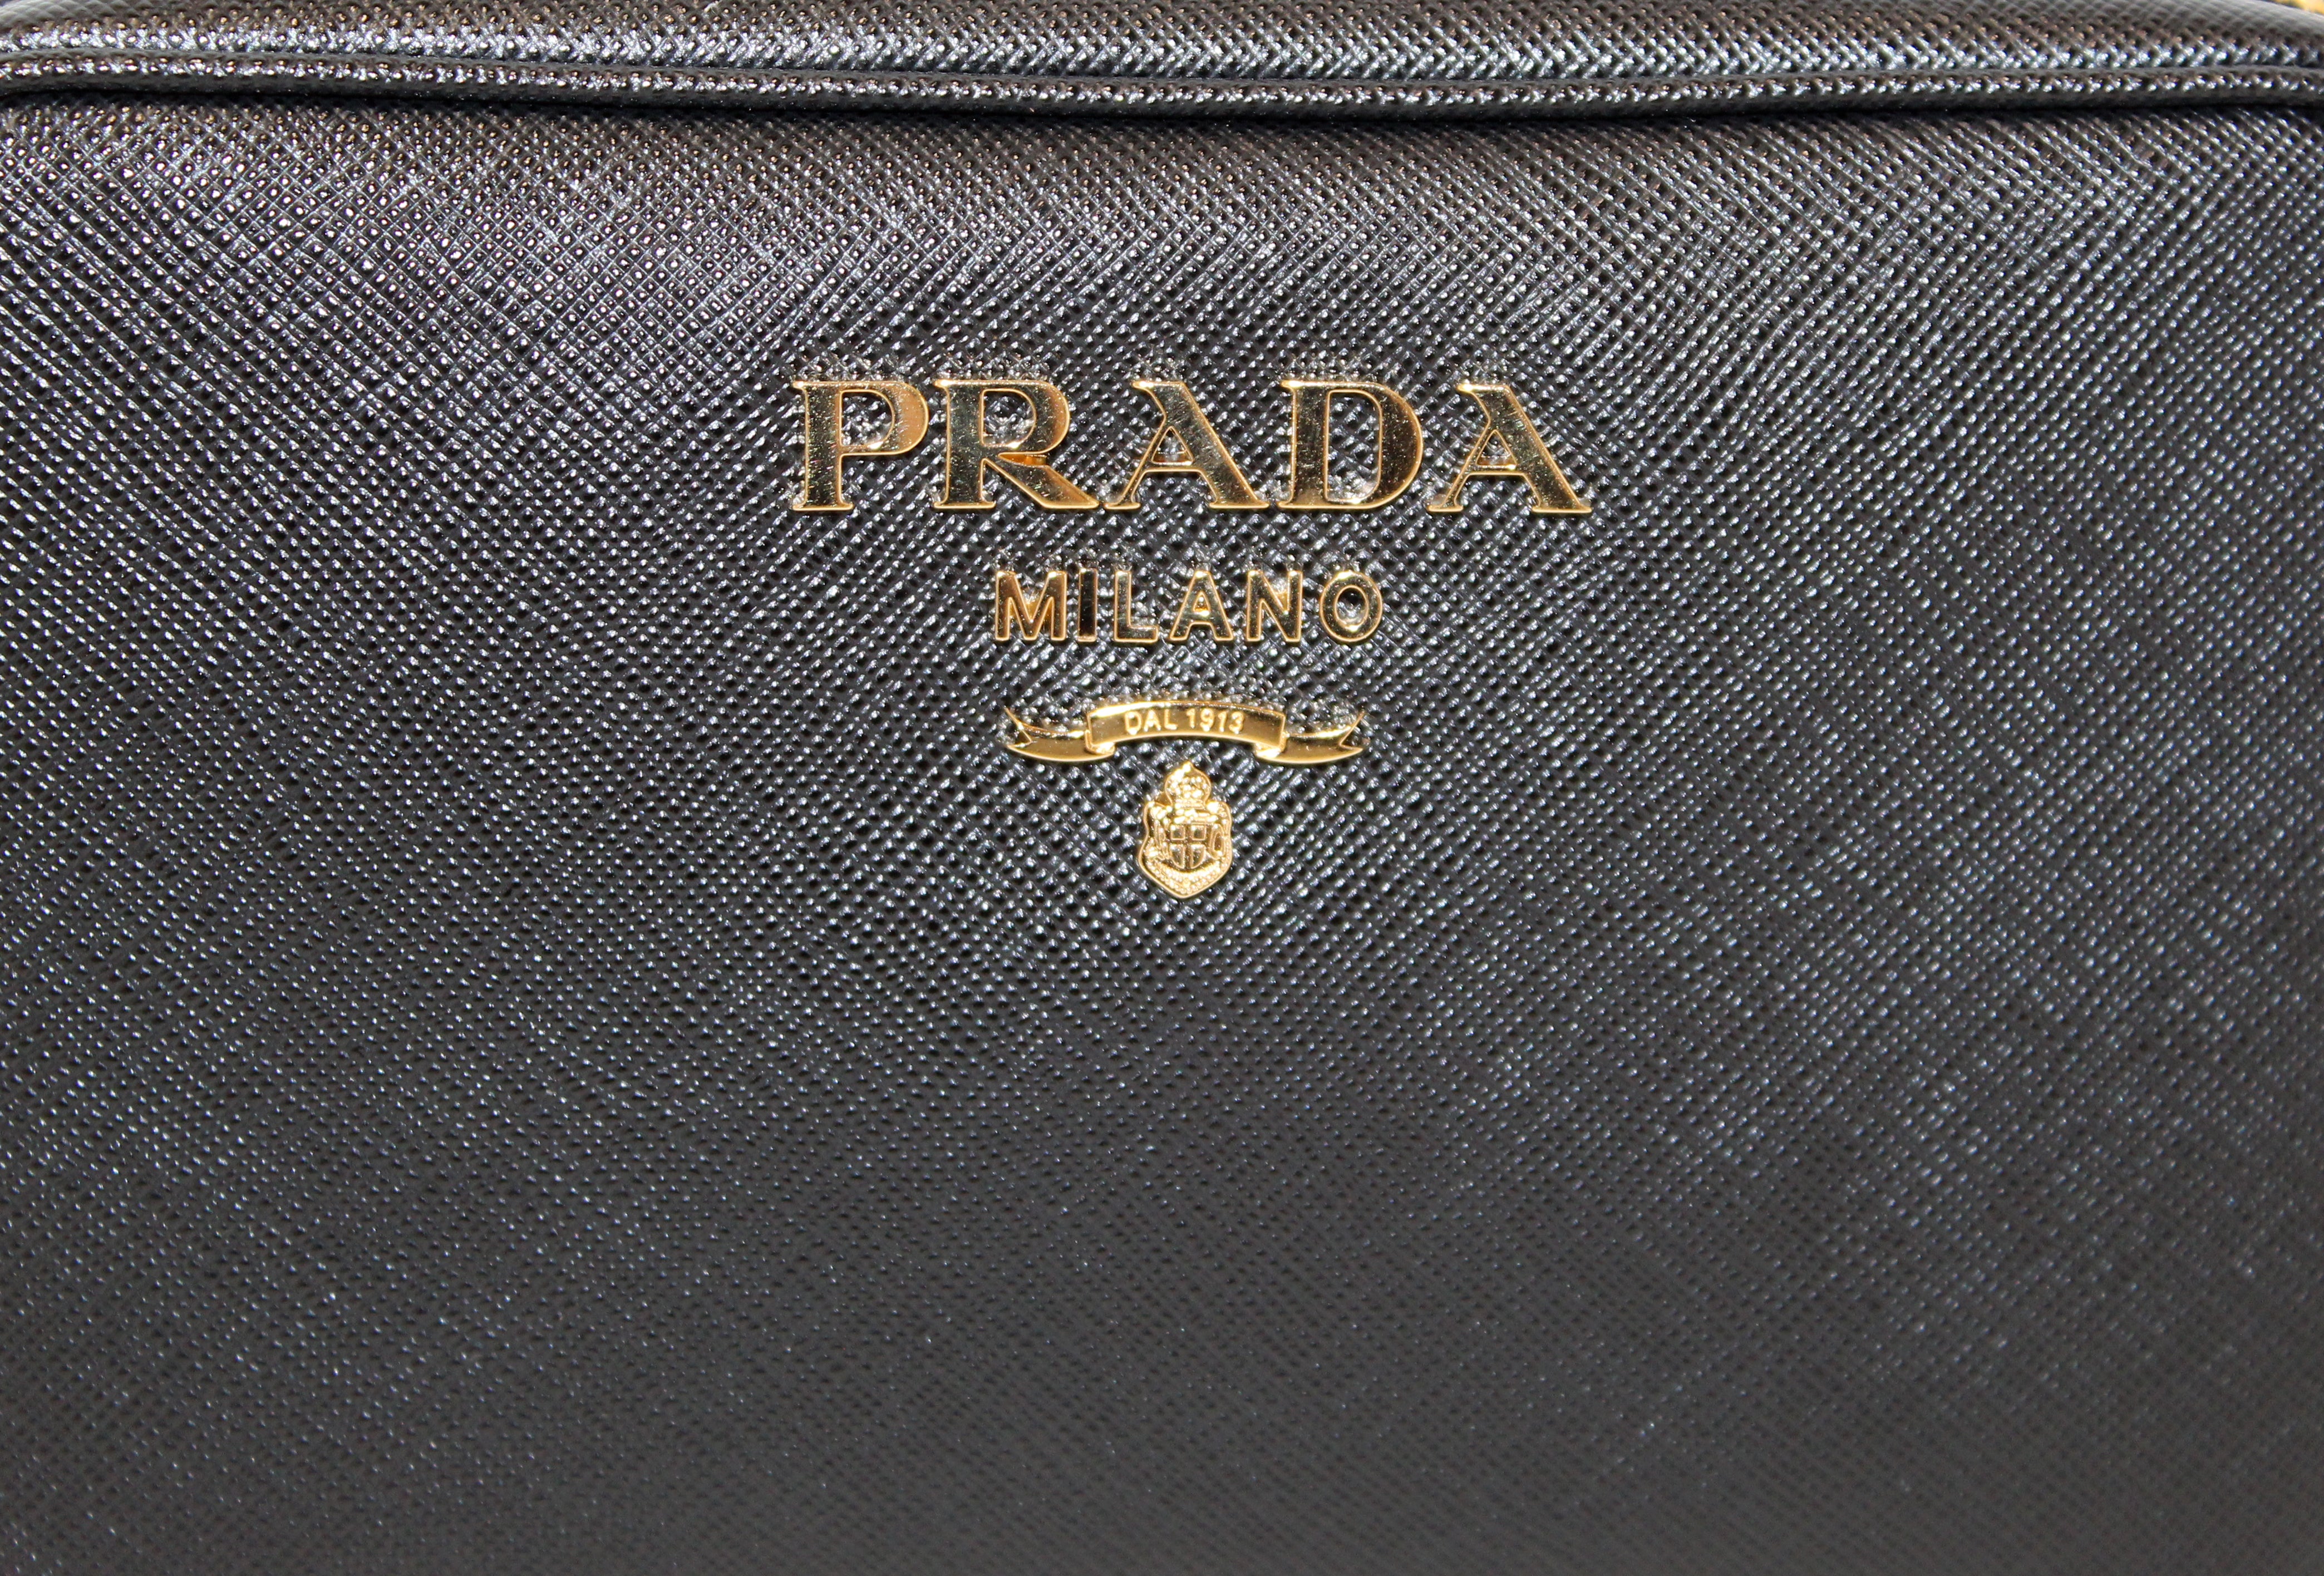 Prada Bandoliera in Pelle Black Sarafino Handbag